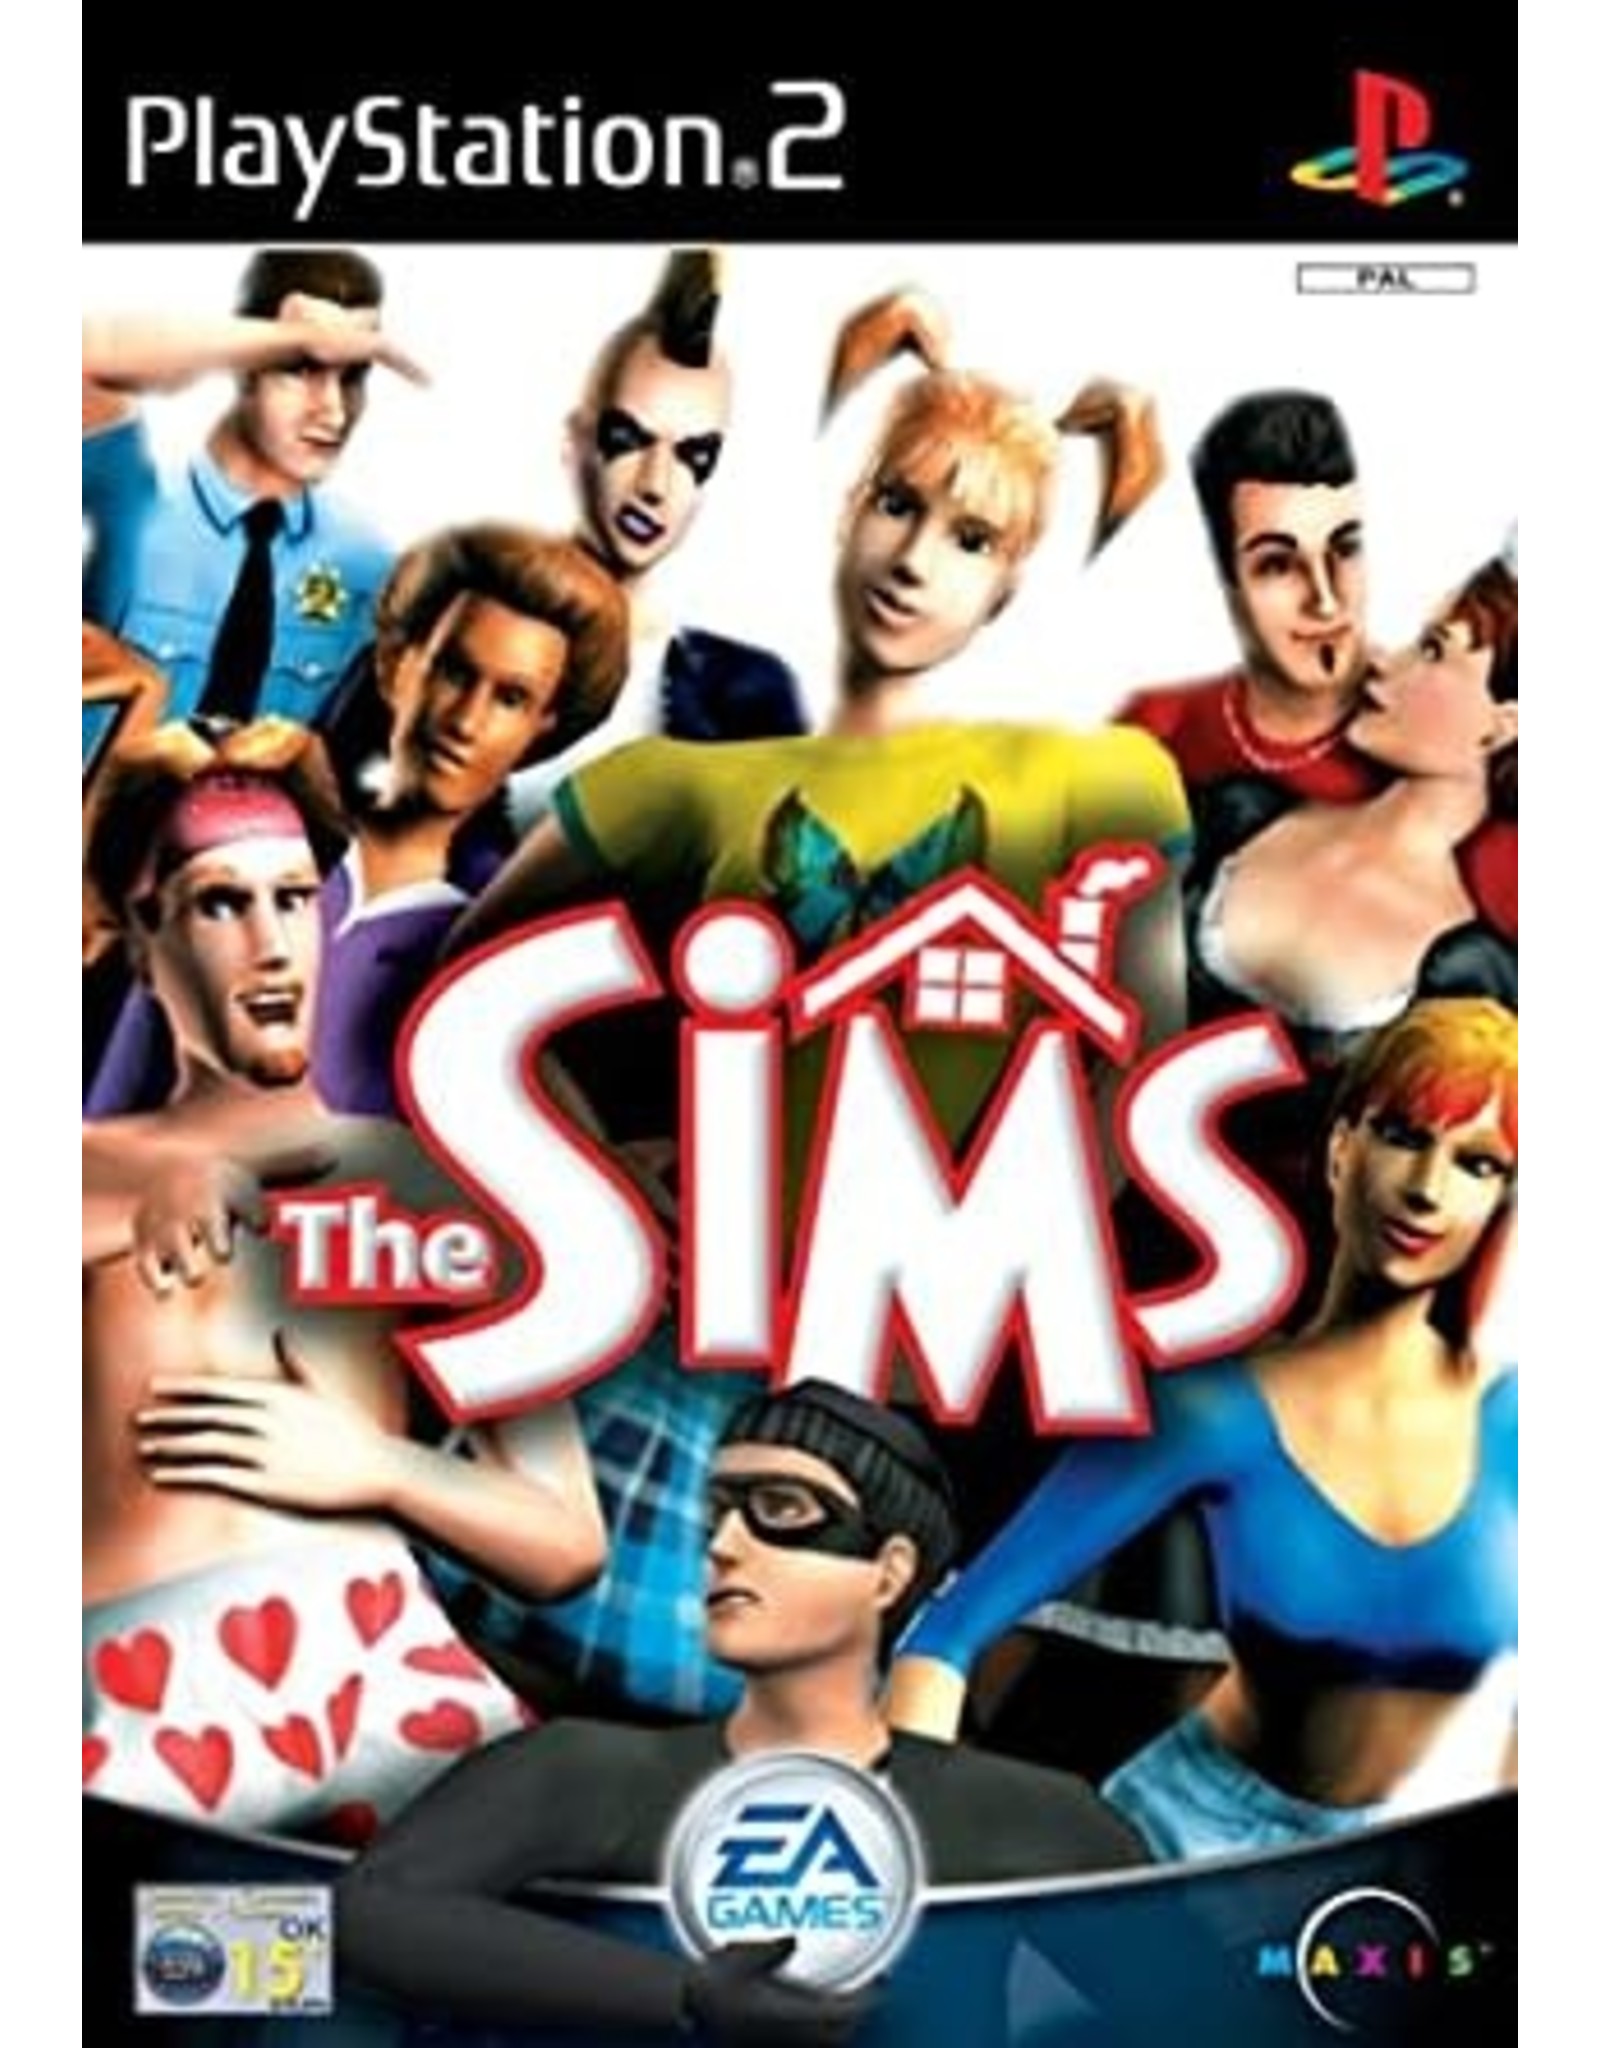 Playstation 2 Sims, The (Greatest Hits, No Manual)